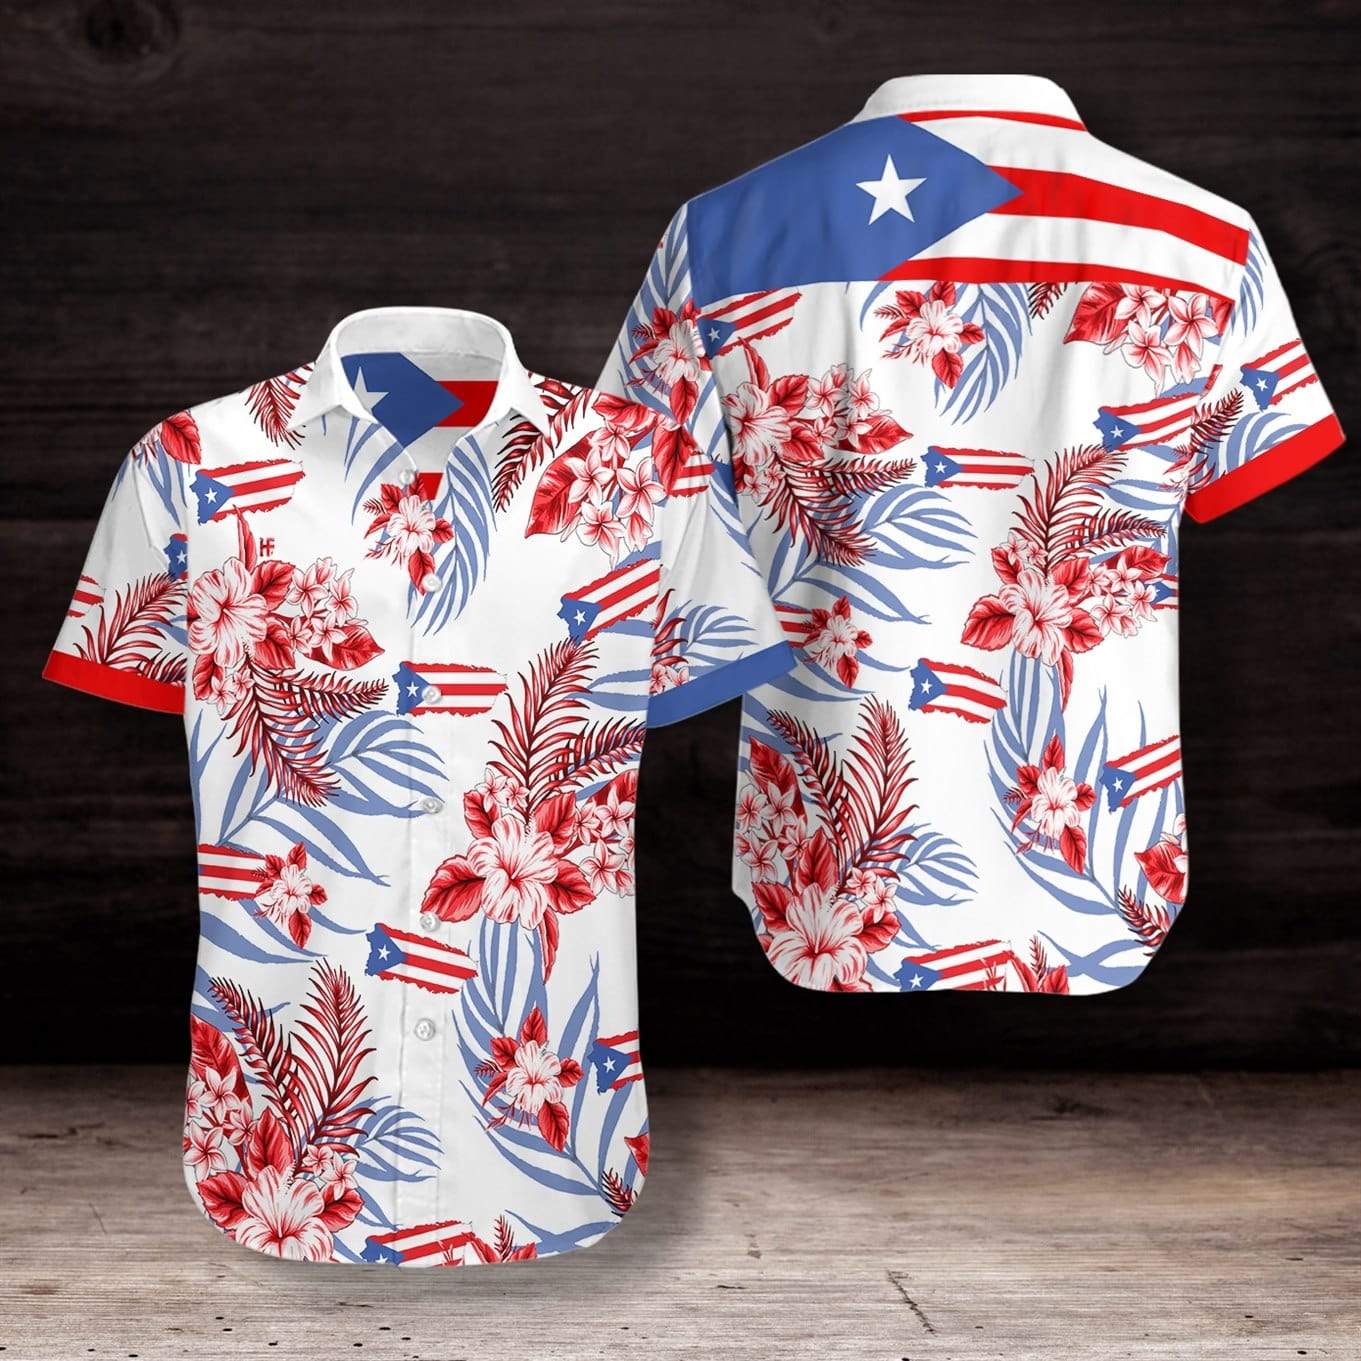 kurobase-amazing-puerto-rice-flag-tropical-hawaiian-shirts.jpg